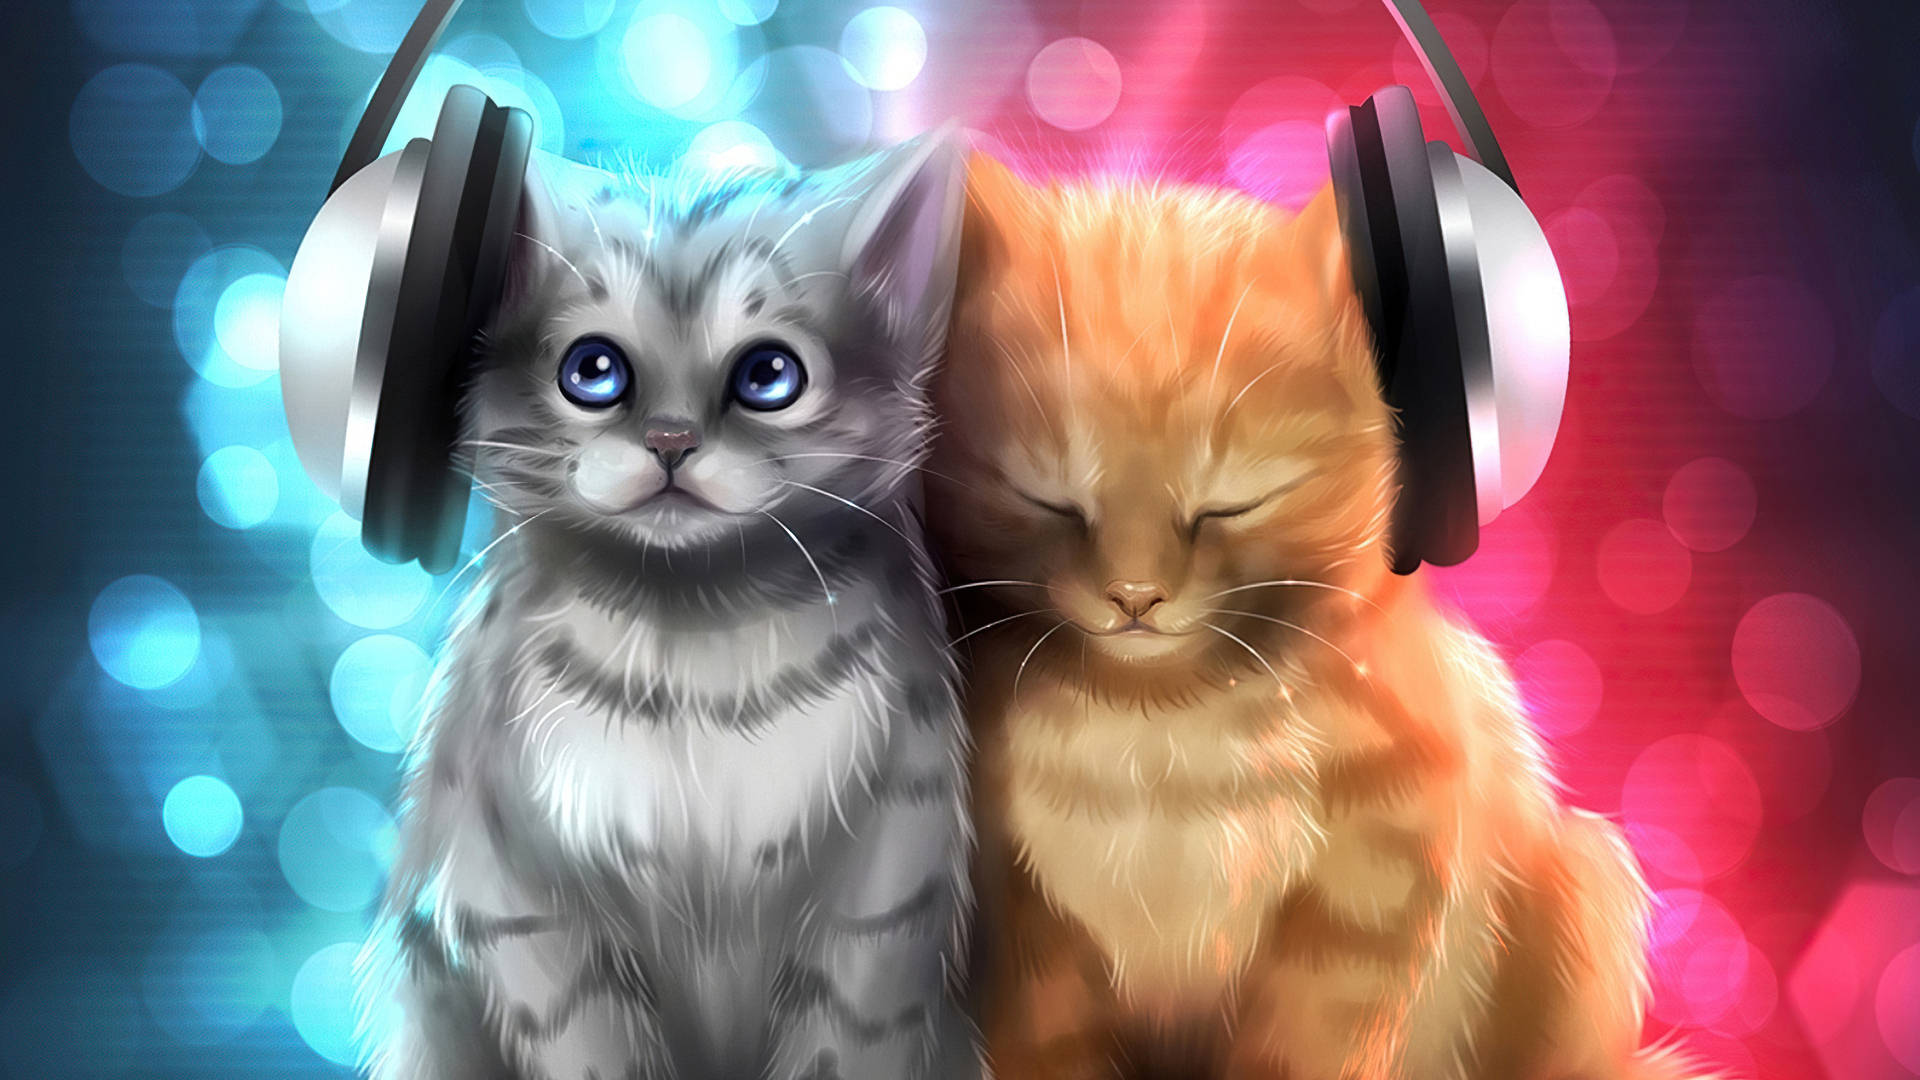 Aesthetic Cats With Headphones Wallpaper